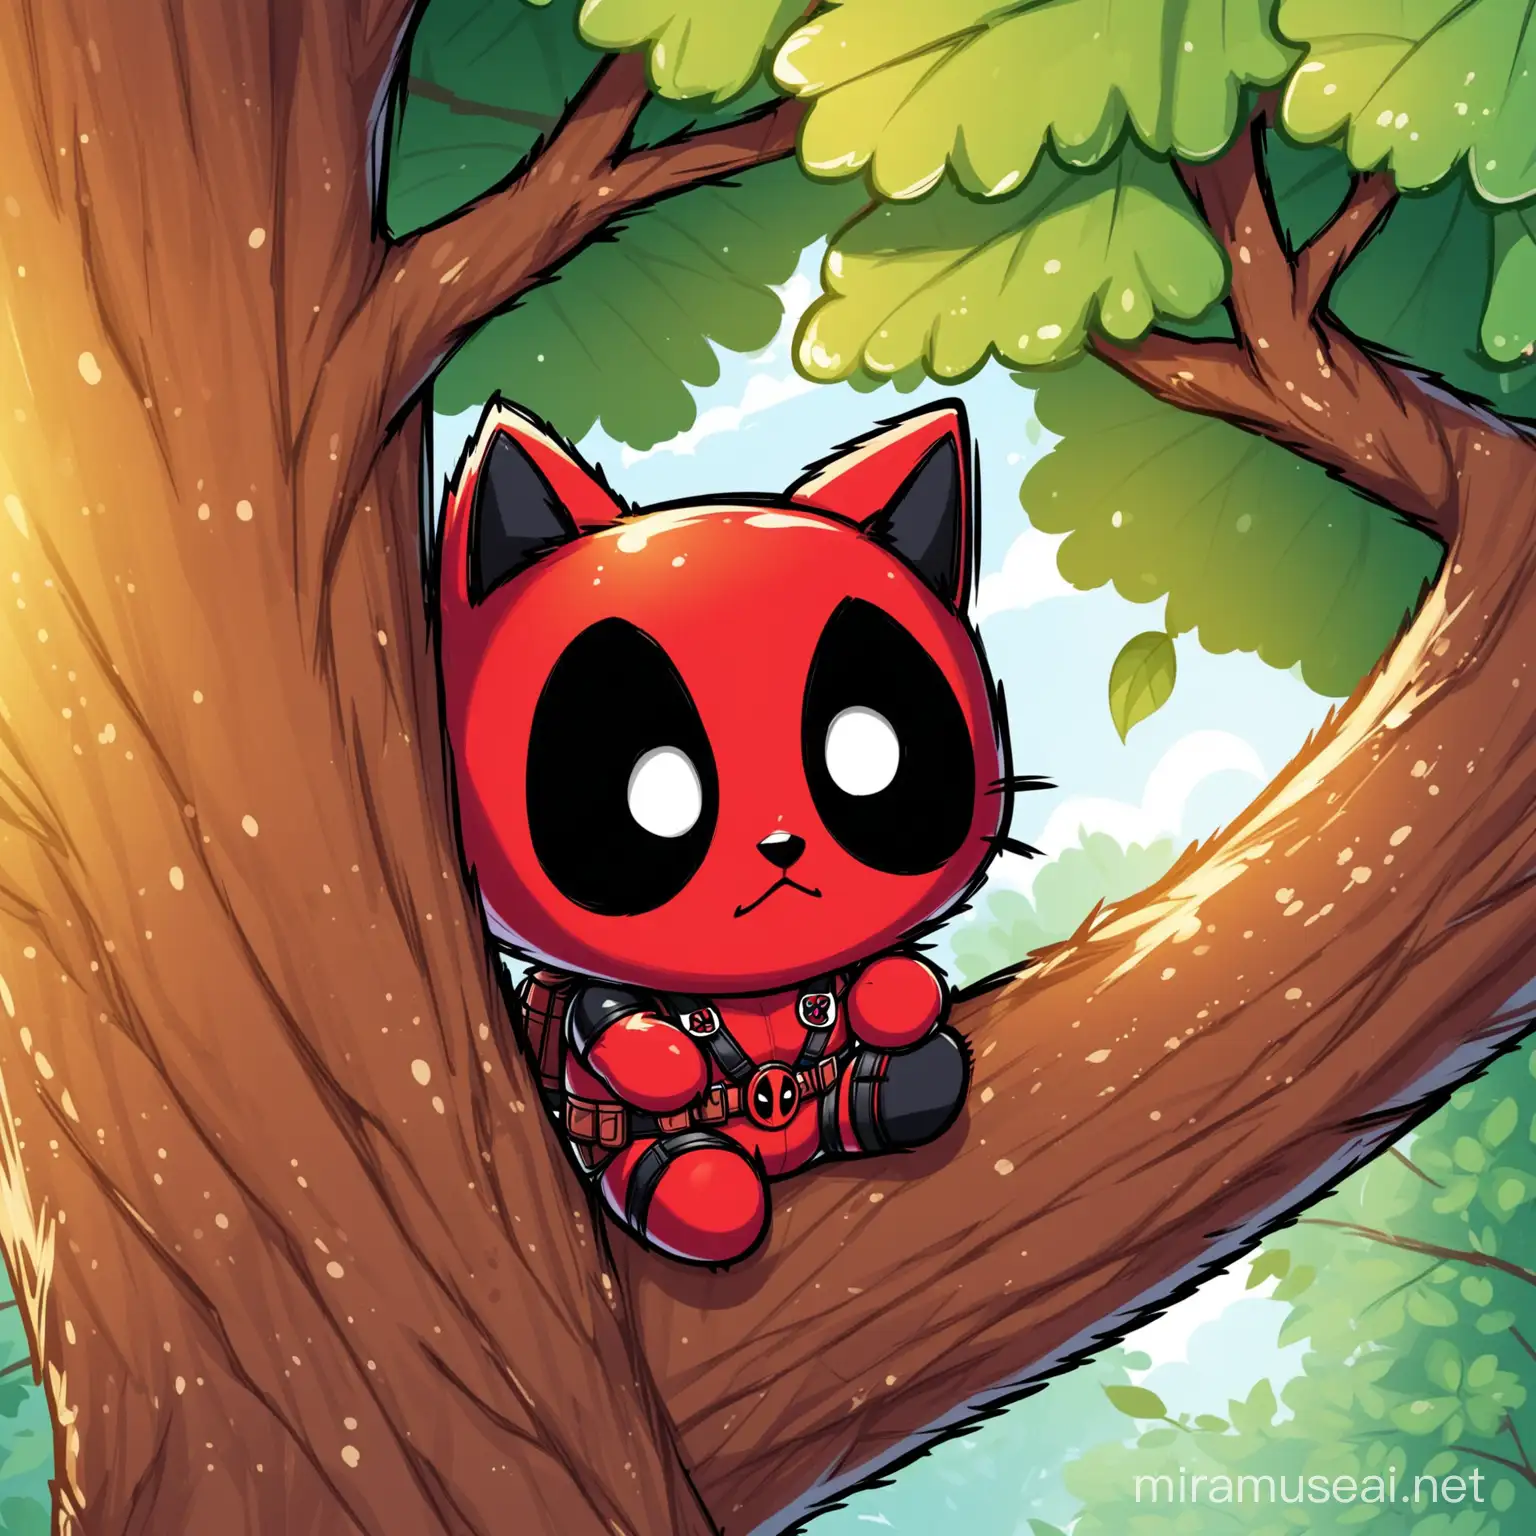 Chibi Deadpool Cat Stuck in a Tree Playful Feline Adventure